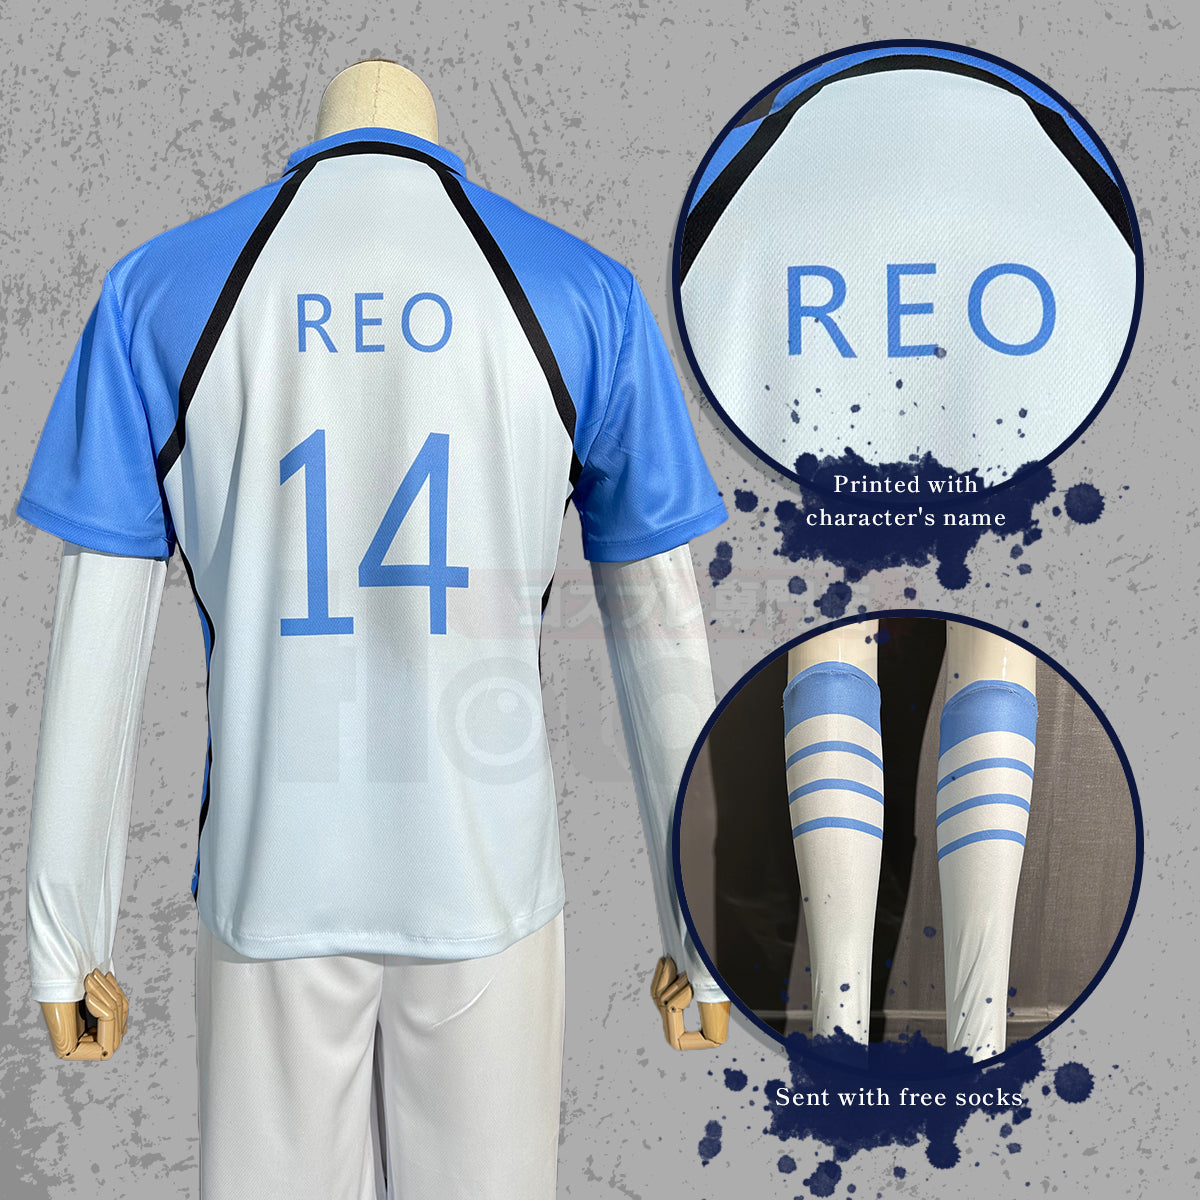 HOLOUN Blue Lock Anime Cosplay Costume Man Shine City No.14 Reo White Blue T-shirt Shorts Socks Top Football Soccer Uniform Sporting Halloween Christmas Gift